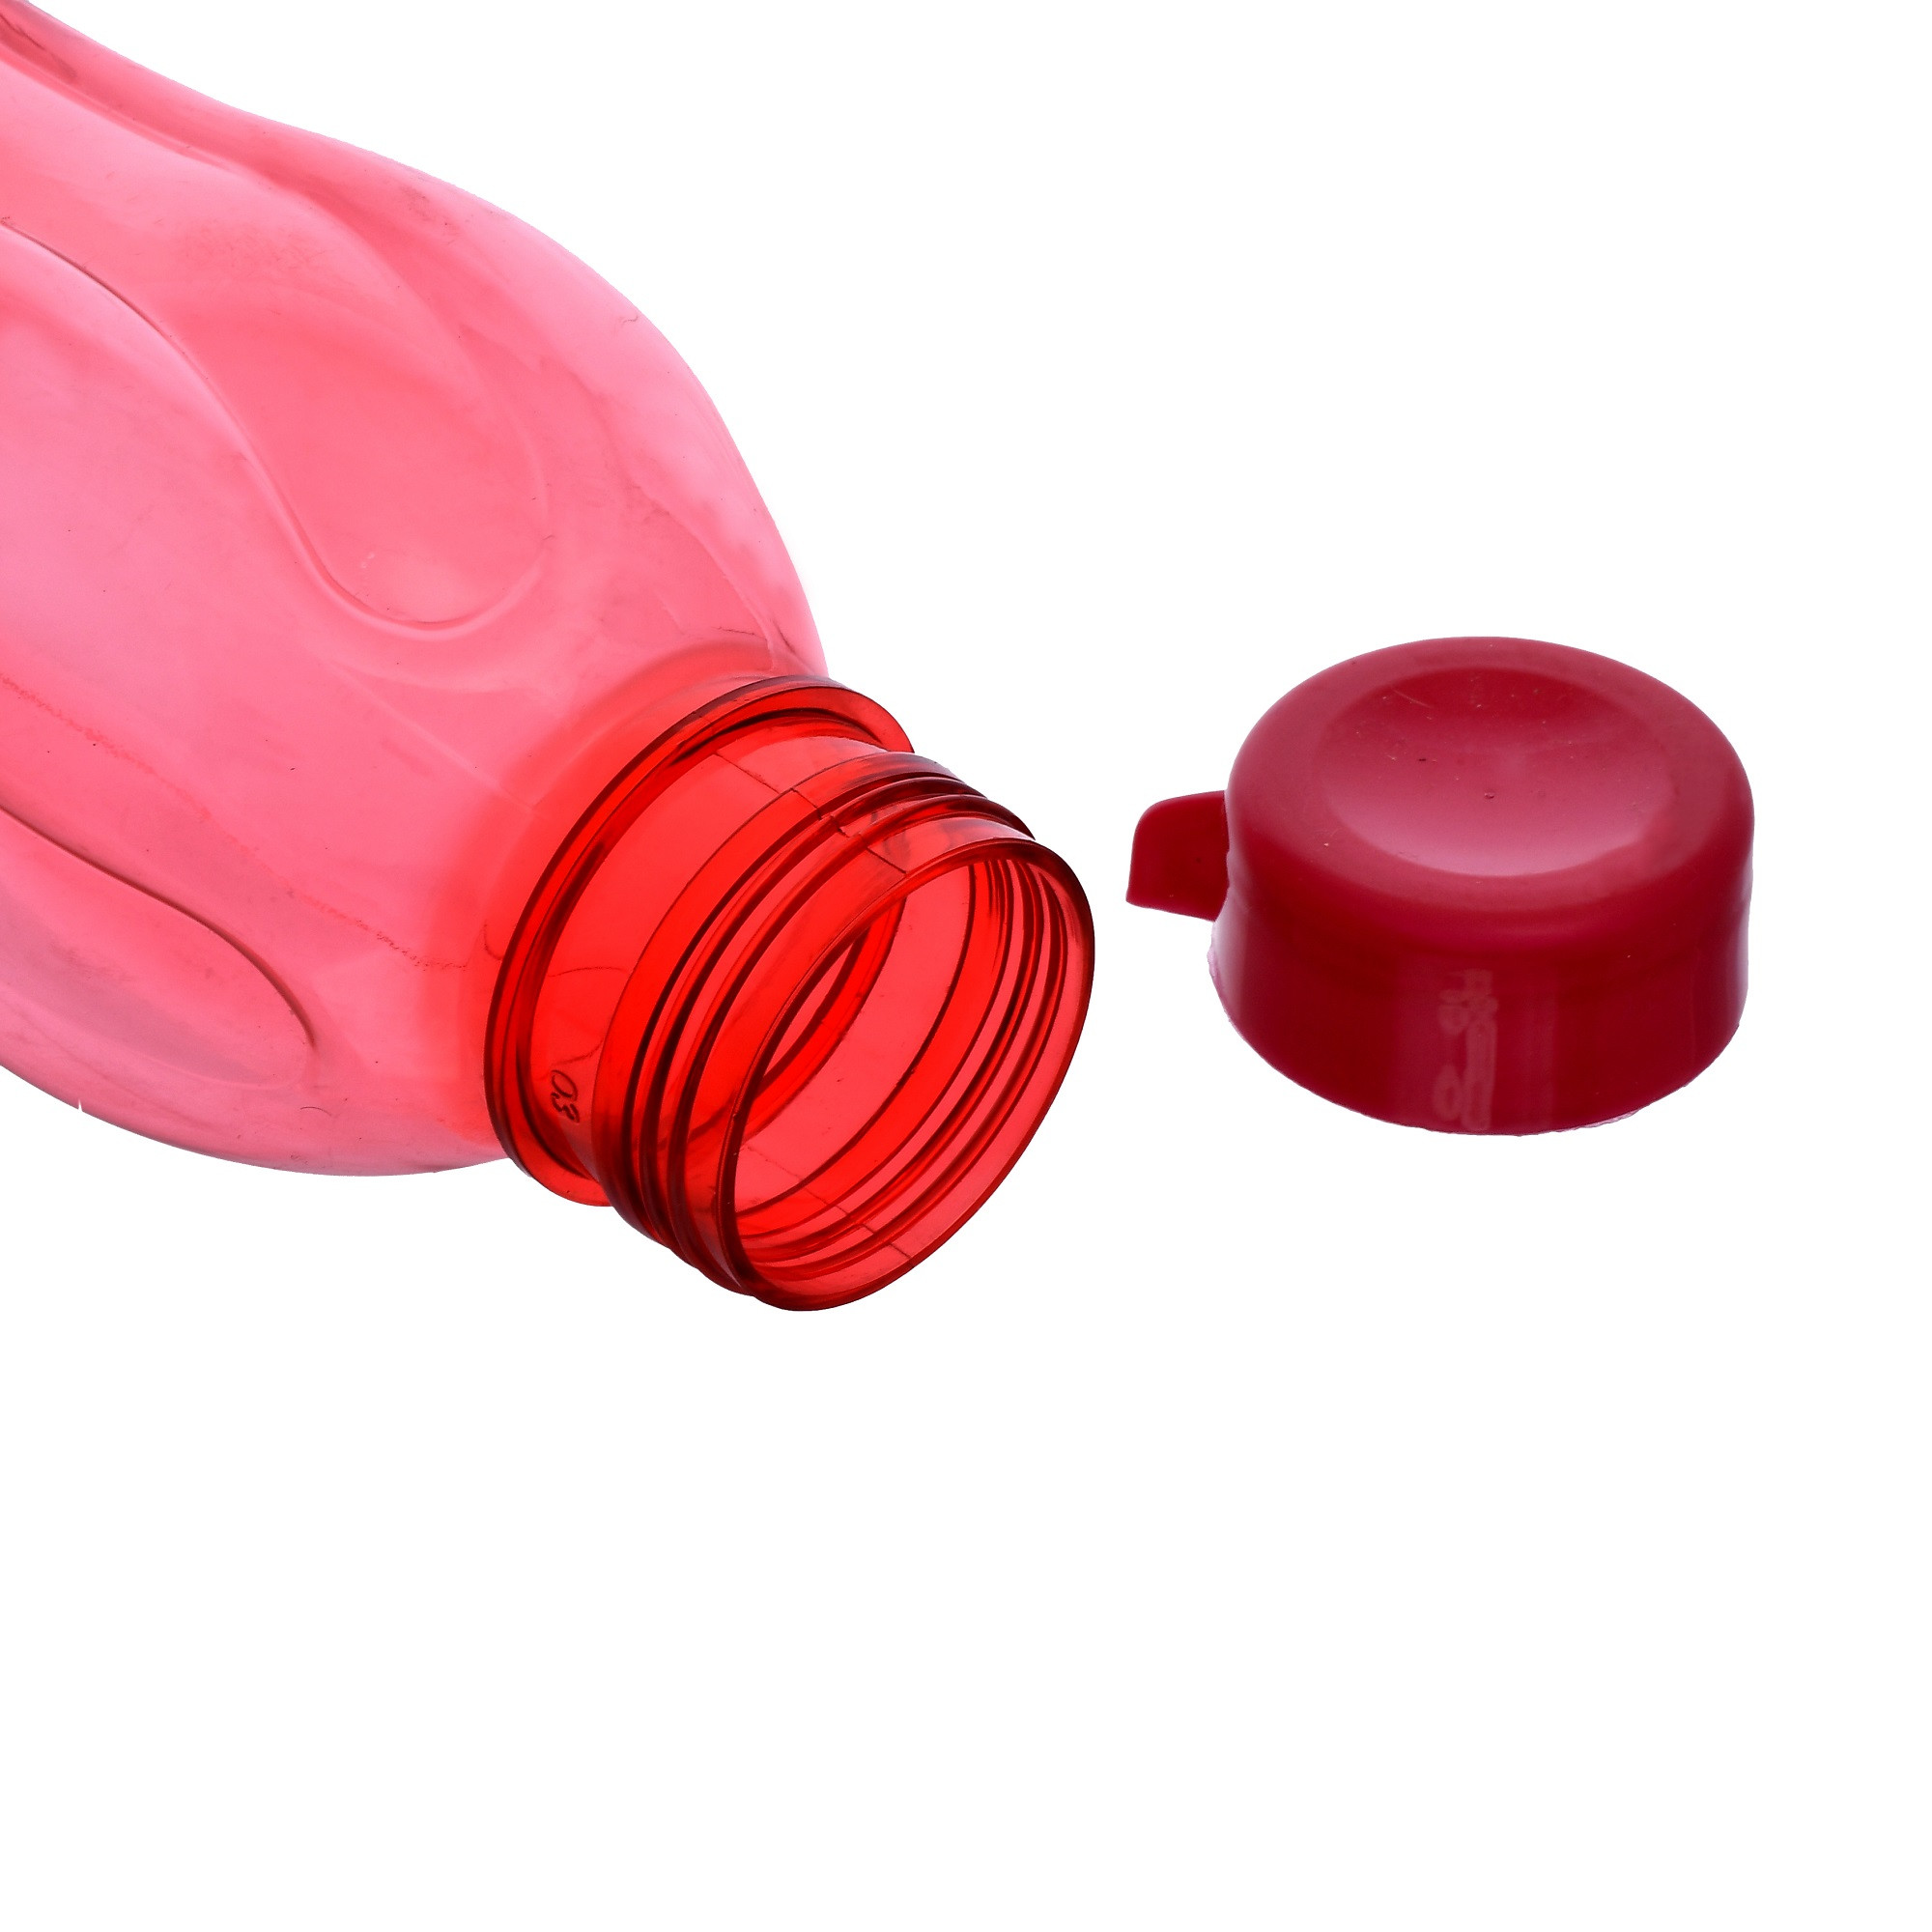 Kuber Industries Plastic Aqua Fridge Water Bottle with Lid (1000ml, Pink)-KUBMART500